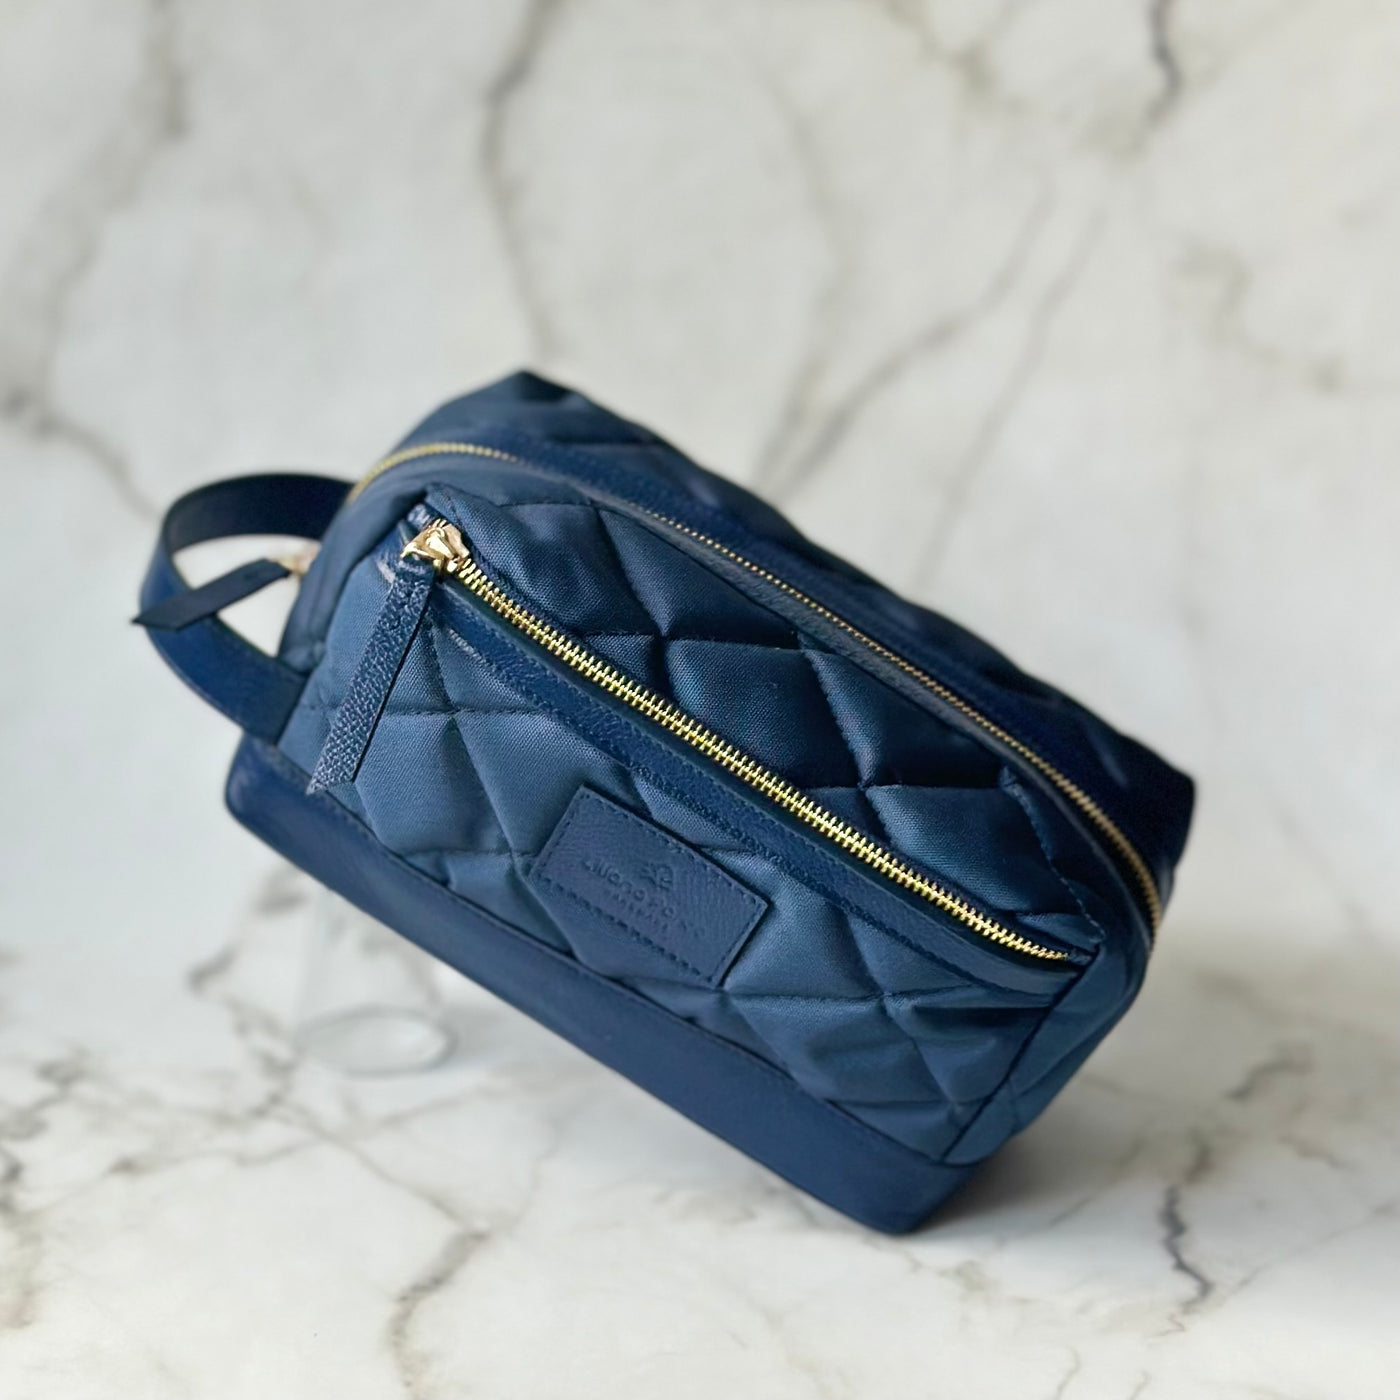 Chic Travel/Essential Bag